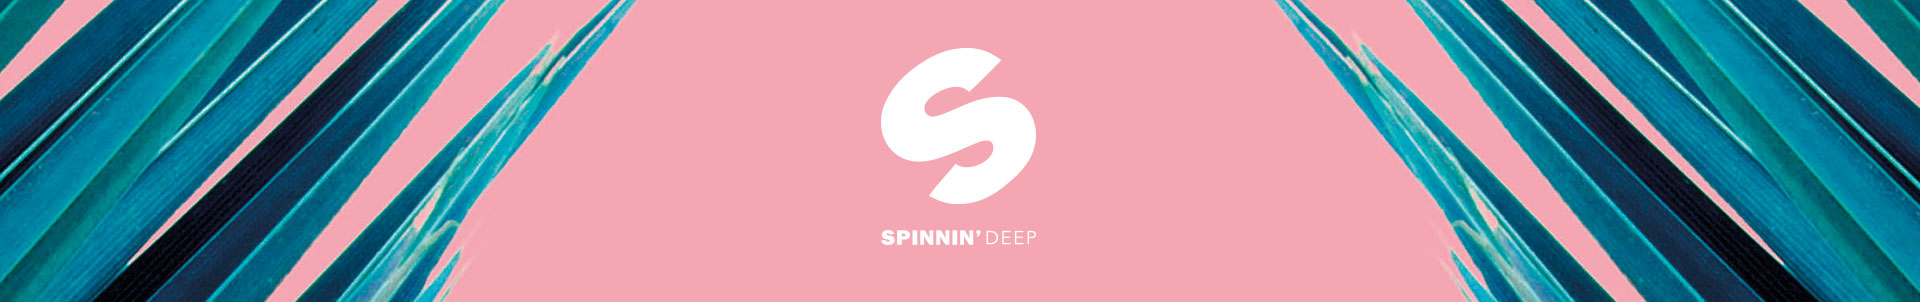 Spinnin' Deep presents Miami lineup